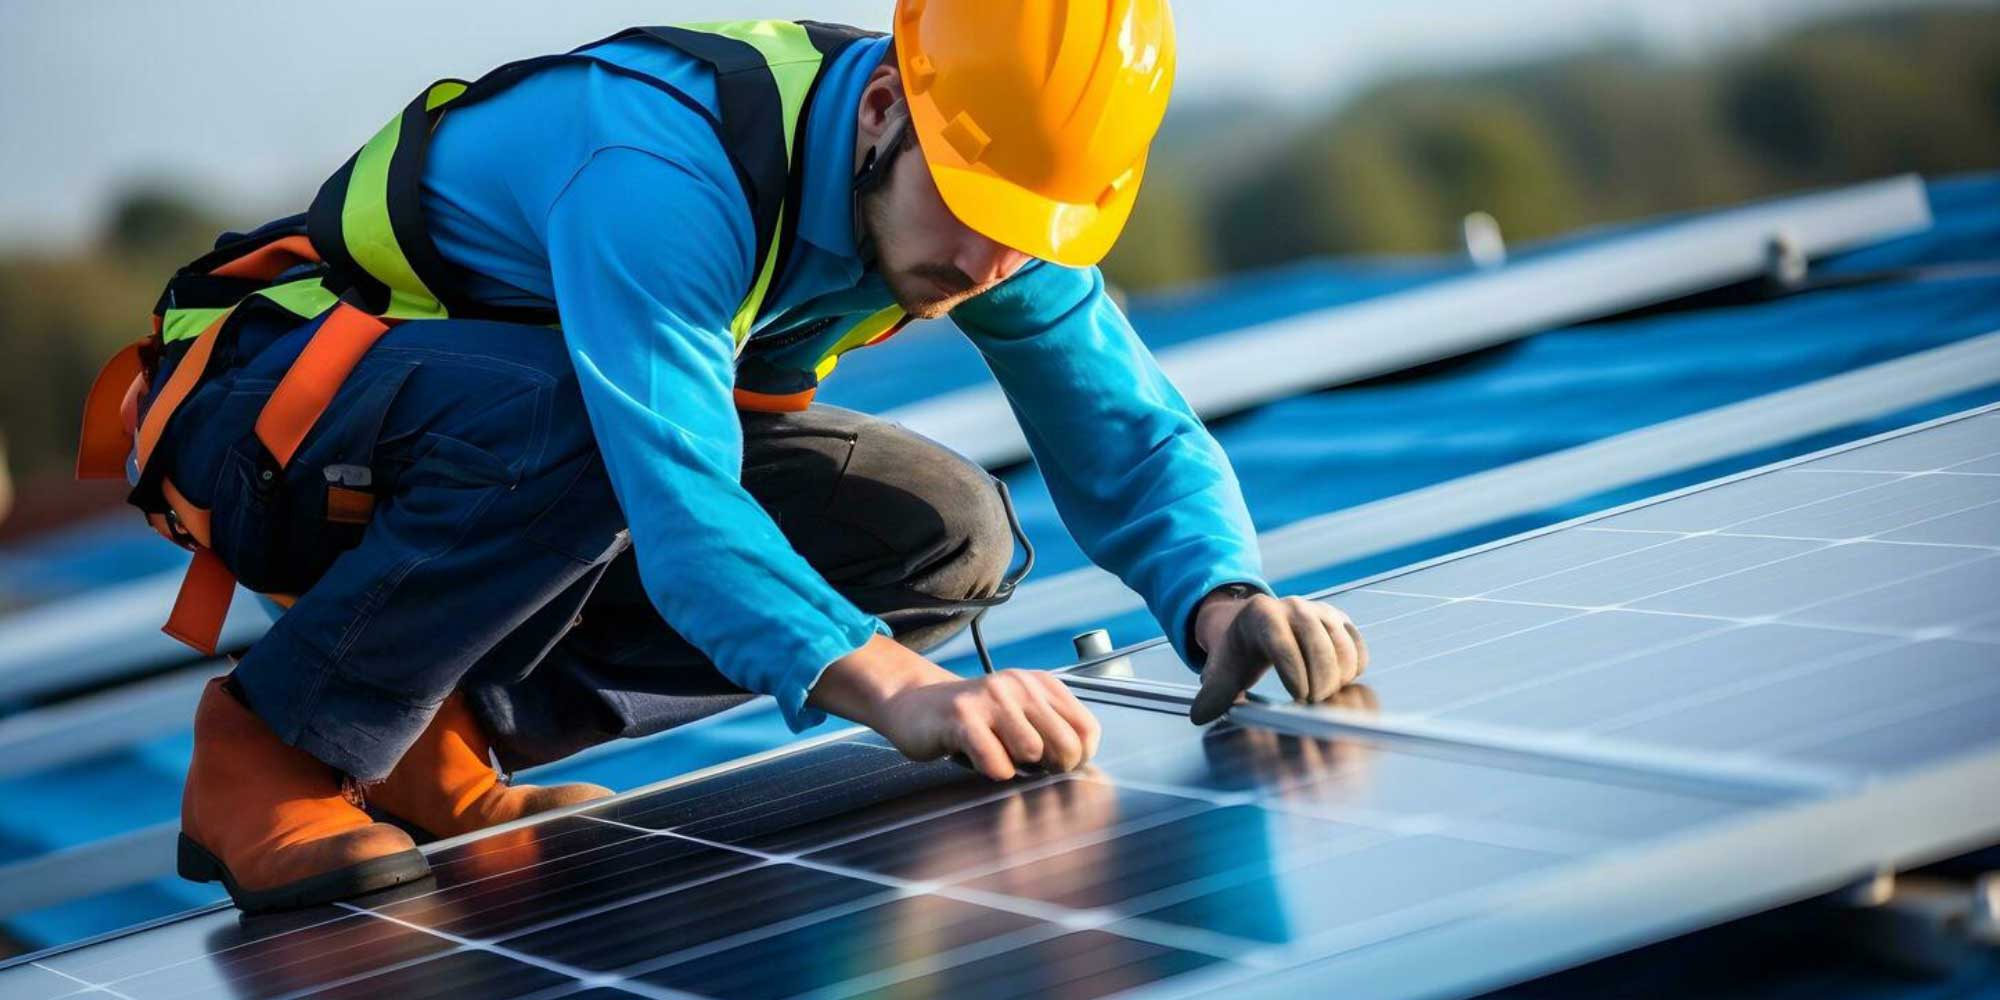 solar-panel-coatings-contribute-to-energy-efficiency